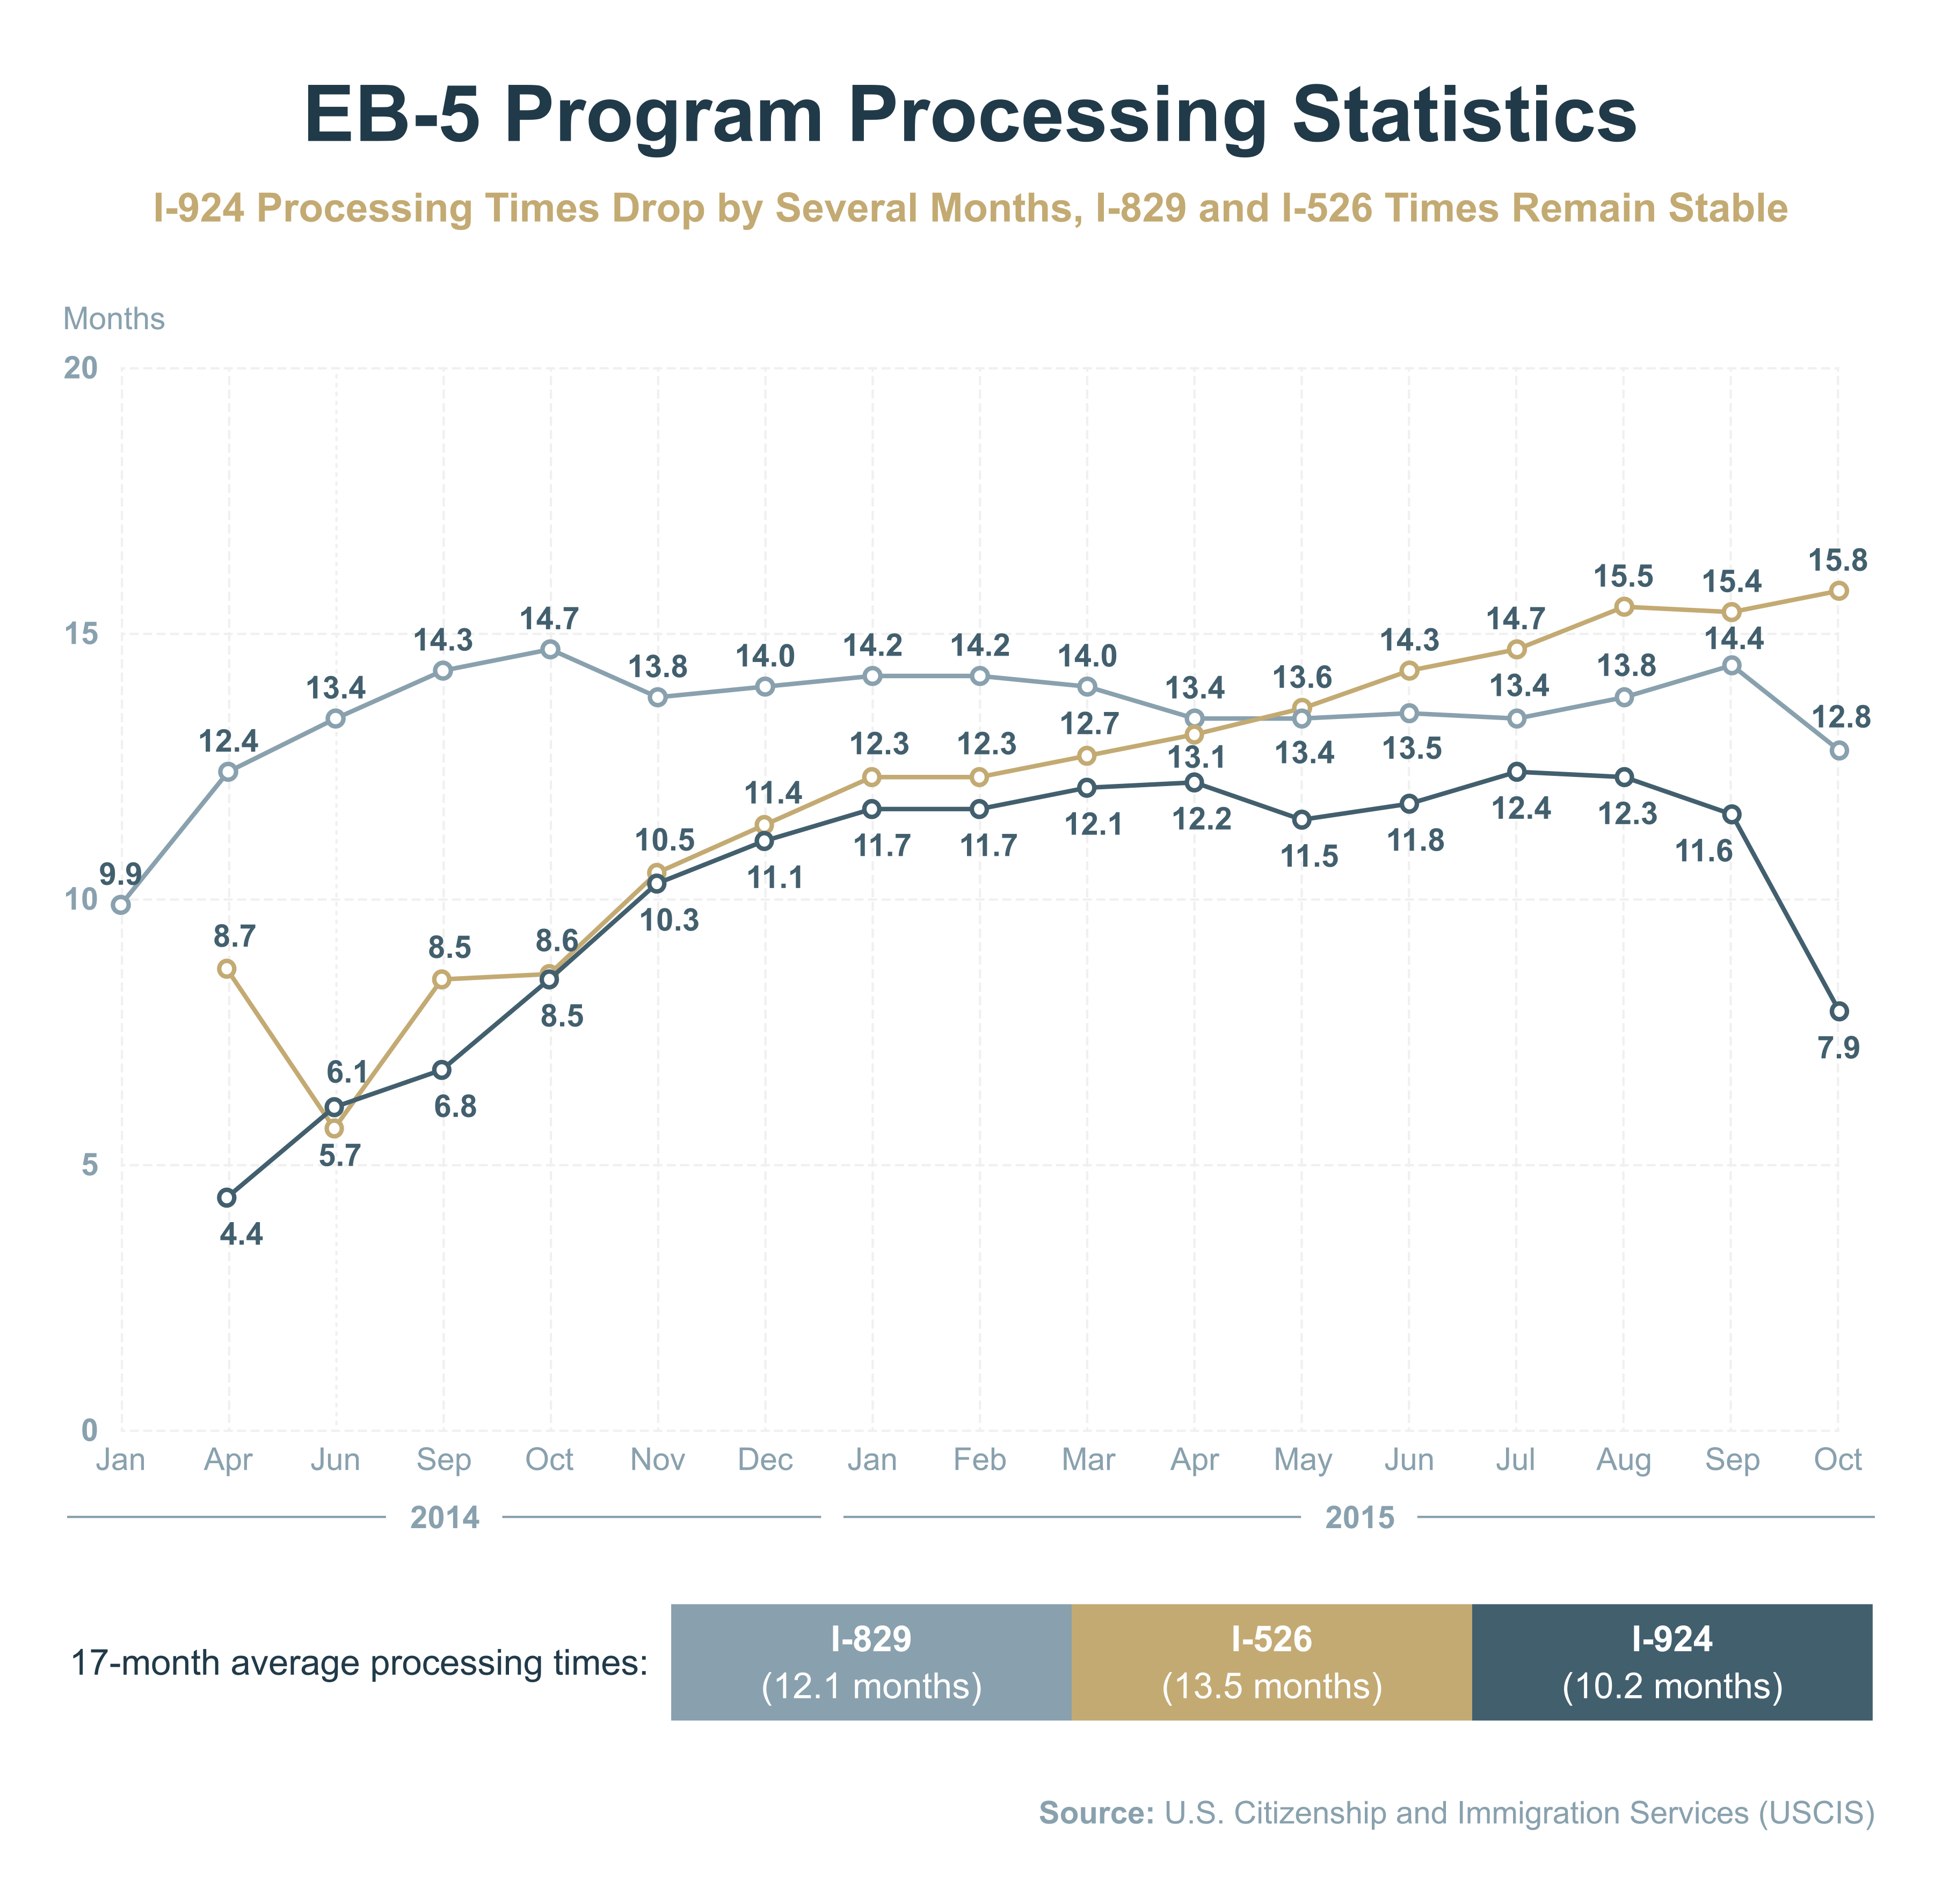 EB-5 Program Processing Statistics